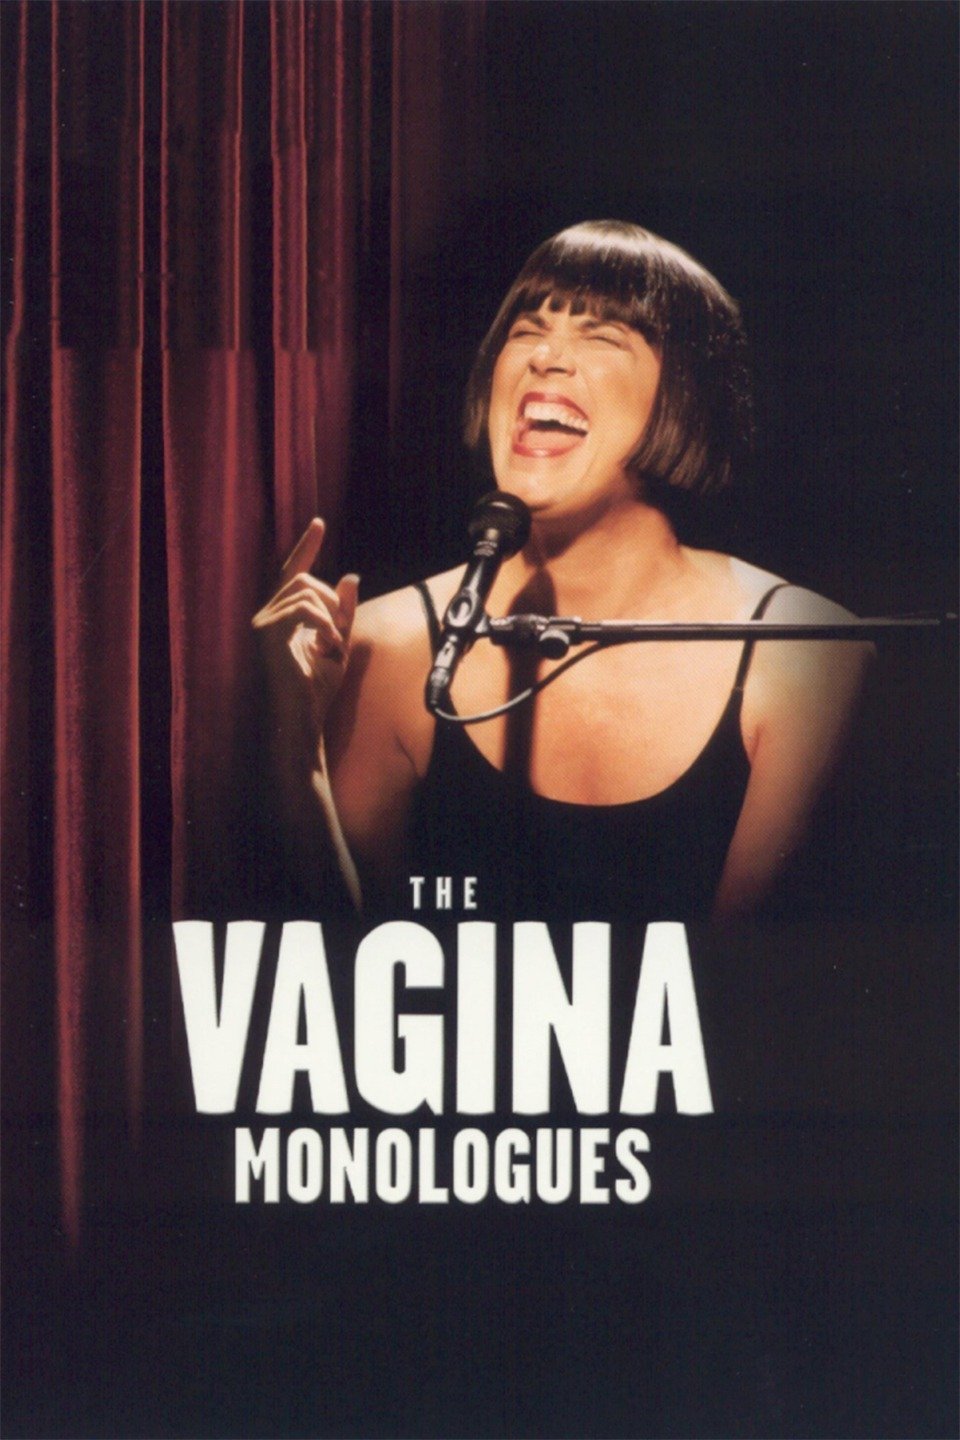 vagina monologues dates neibar wife sex